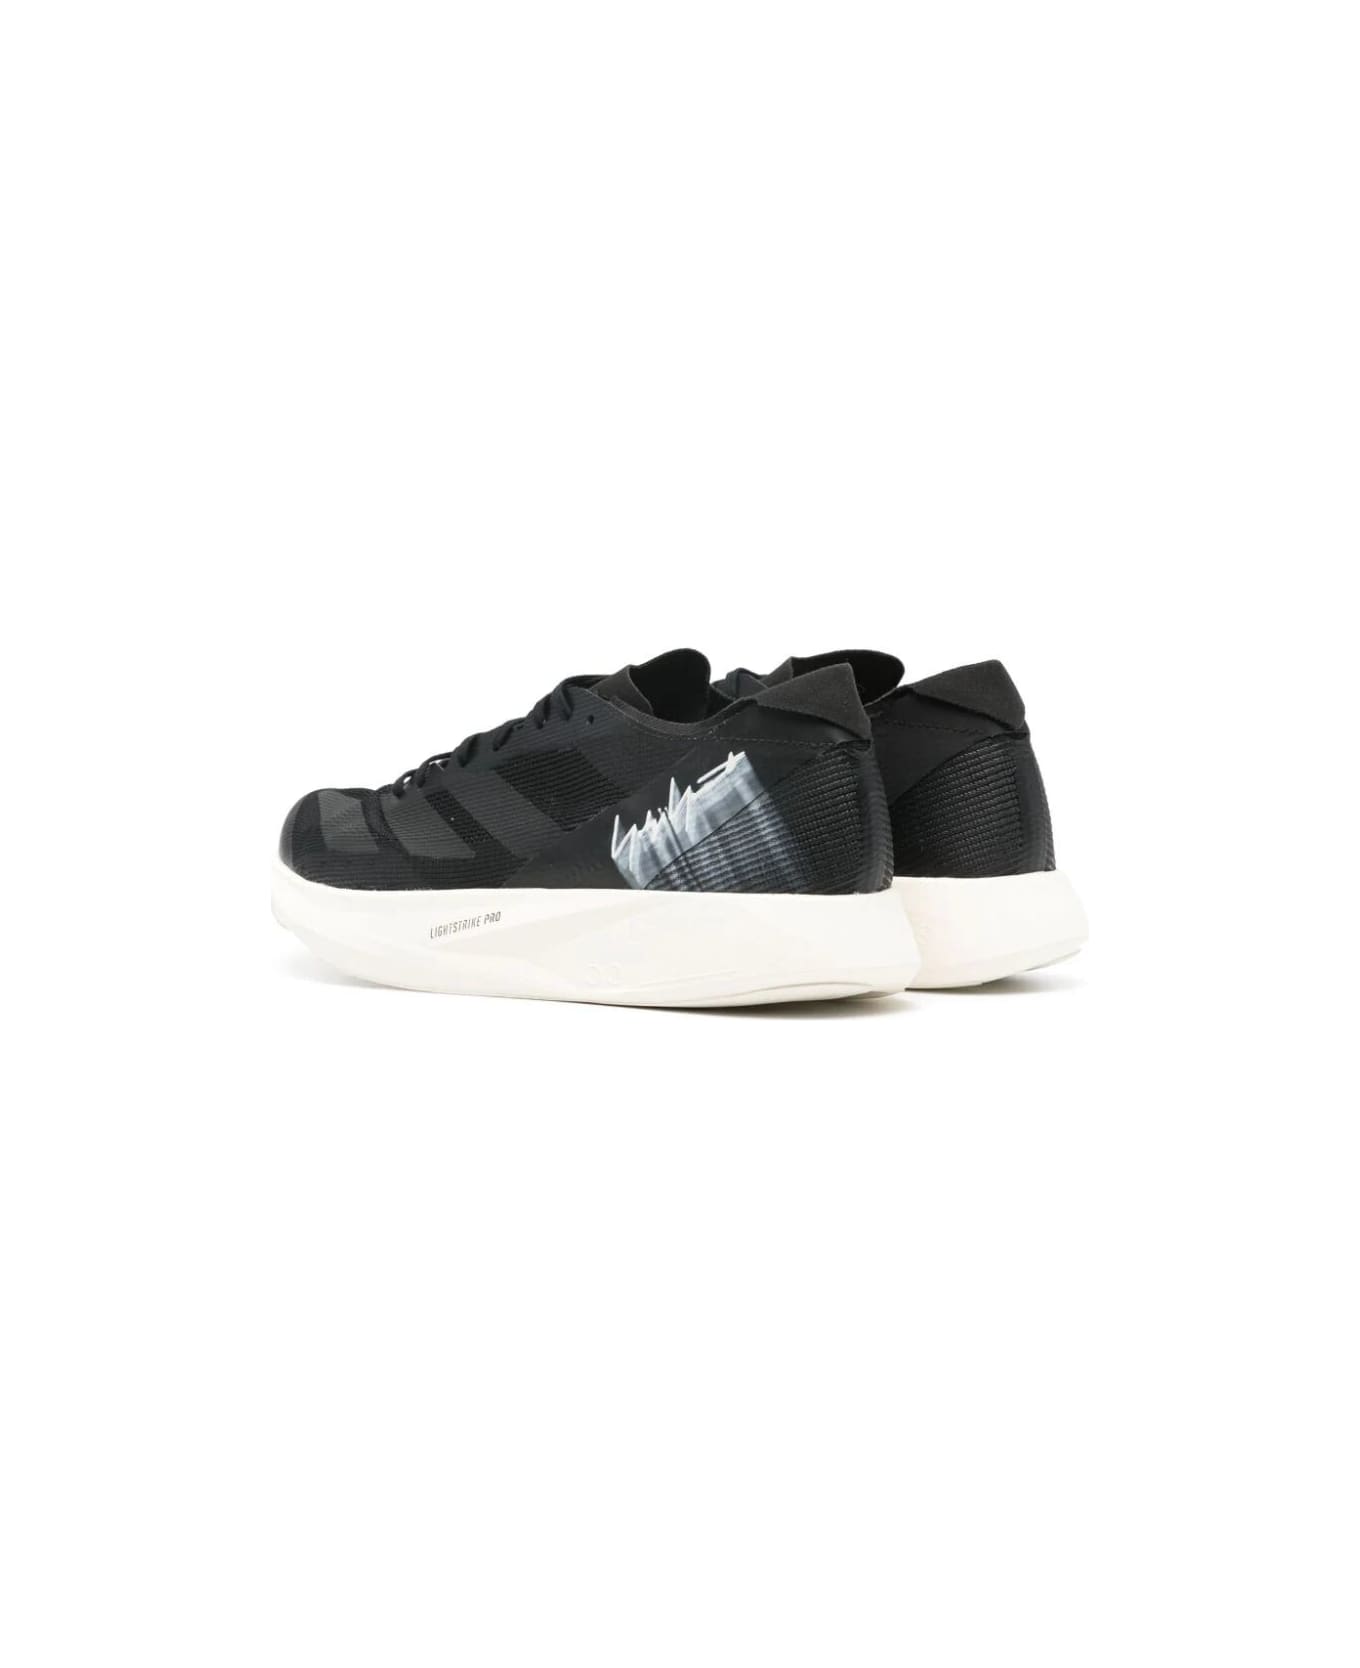 Y-3 Takumi Sen 10 Sneaker - Black Off White